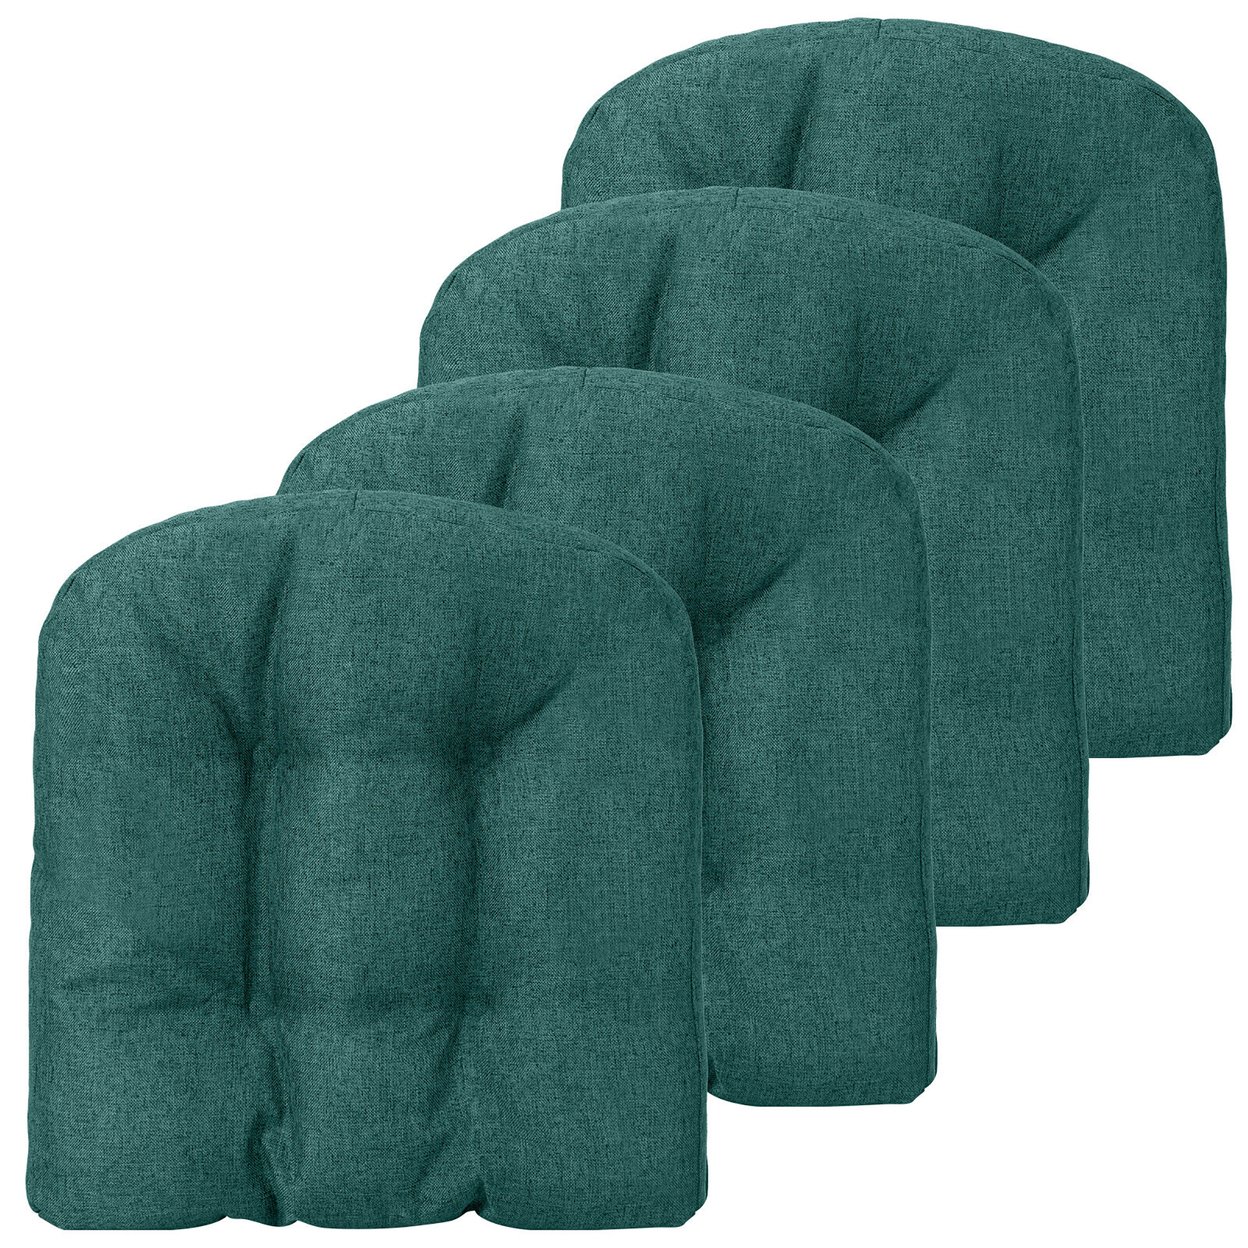 4 Pcs Patio Dining Chair Cushions U-Shaped Chair Pads Non-Slip Bottom - Navy Blue